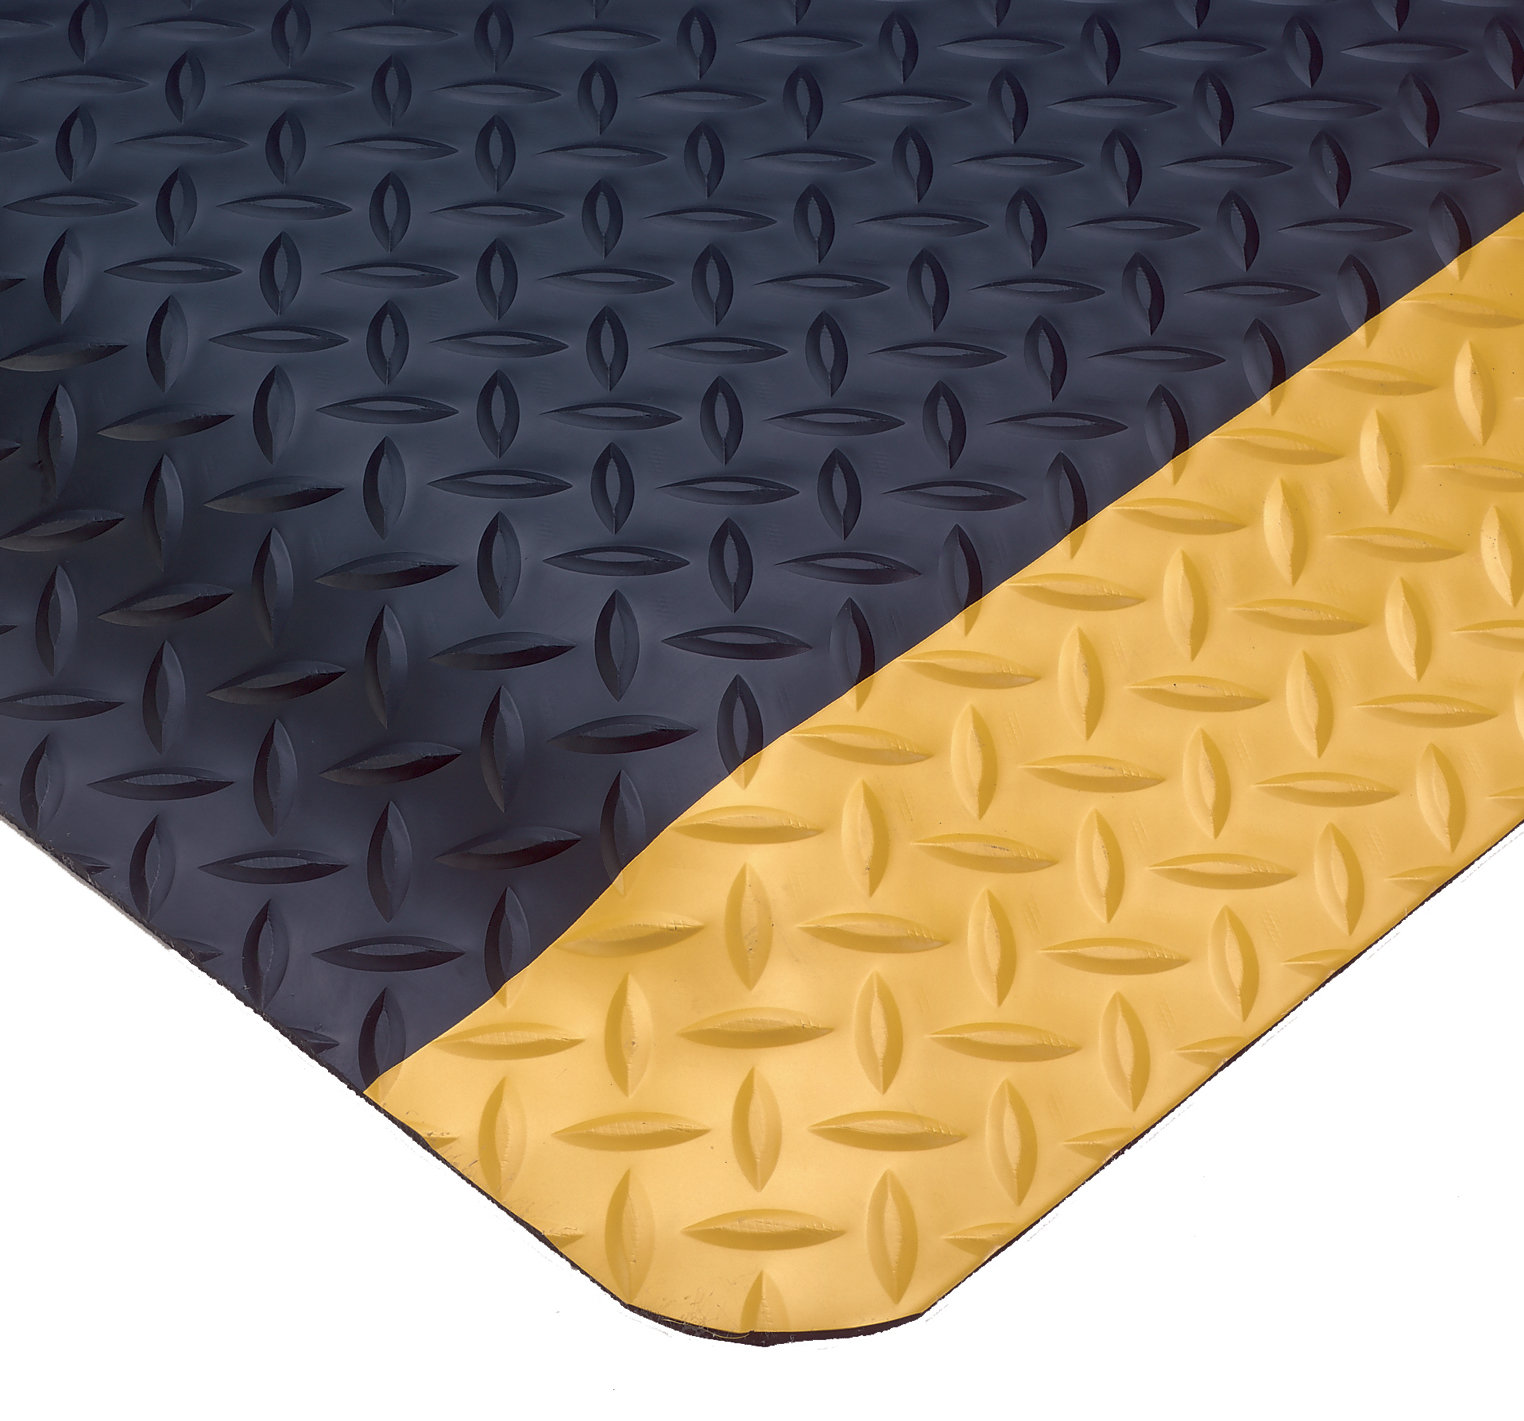 Diamond Plate Anti-Fatigue Rubber mats